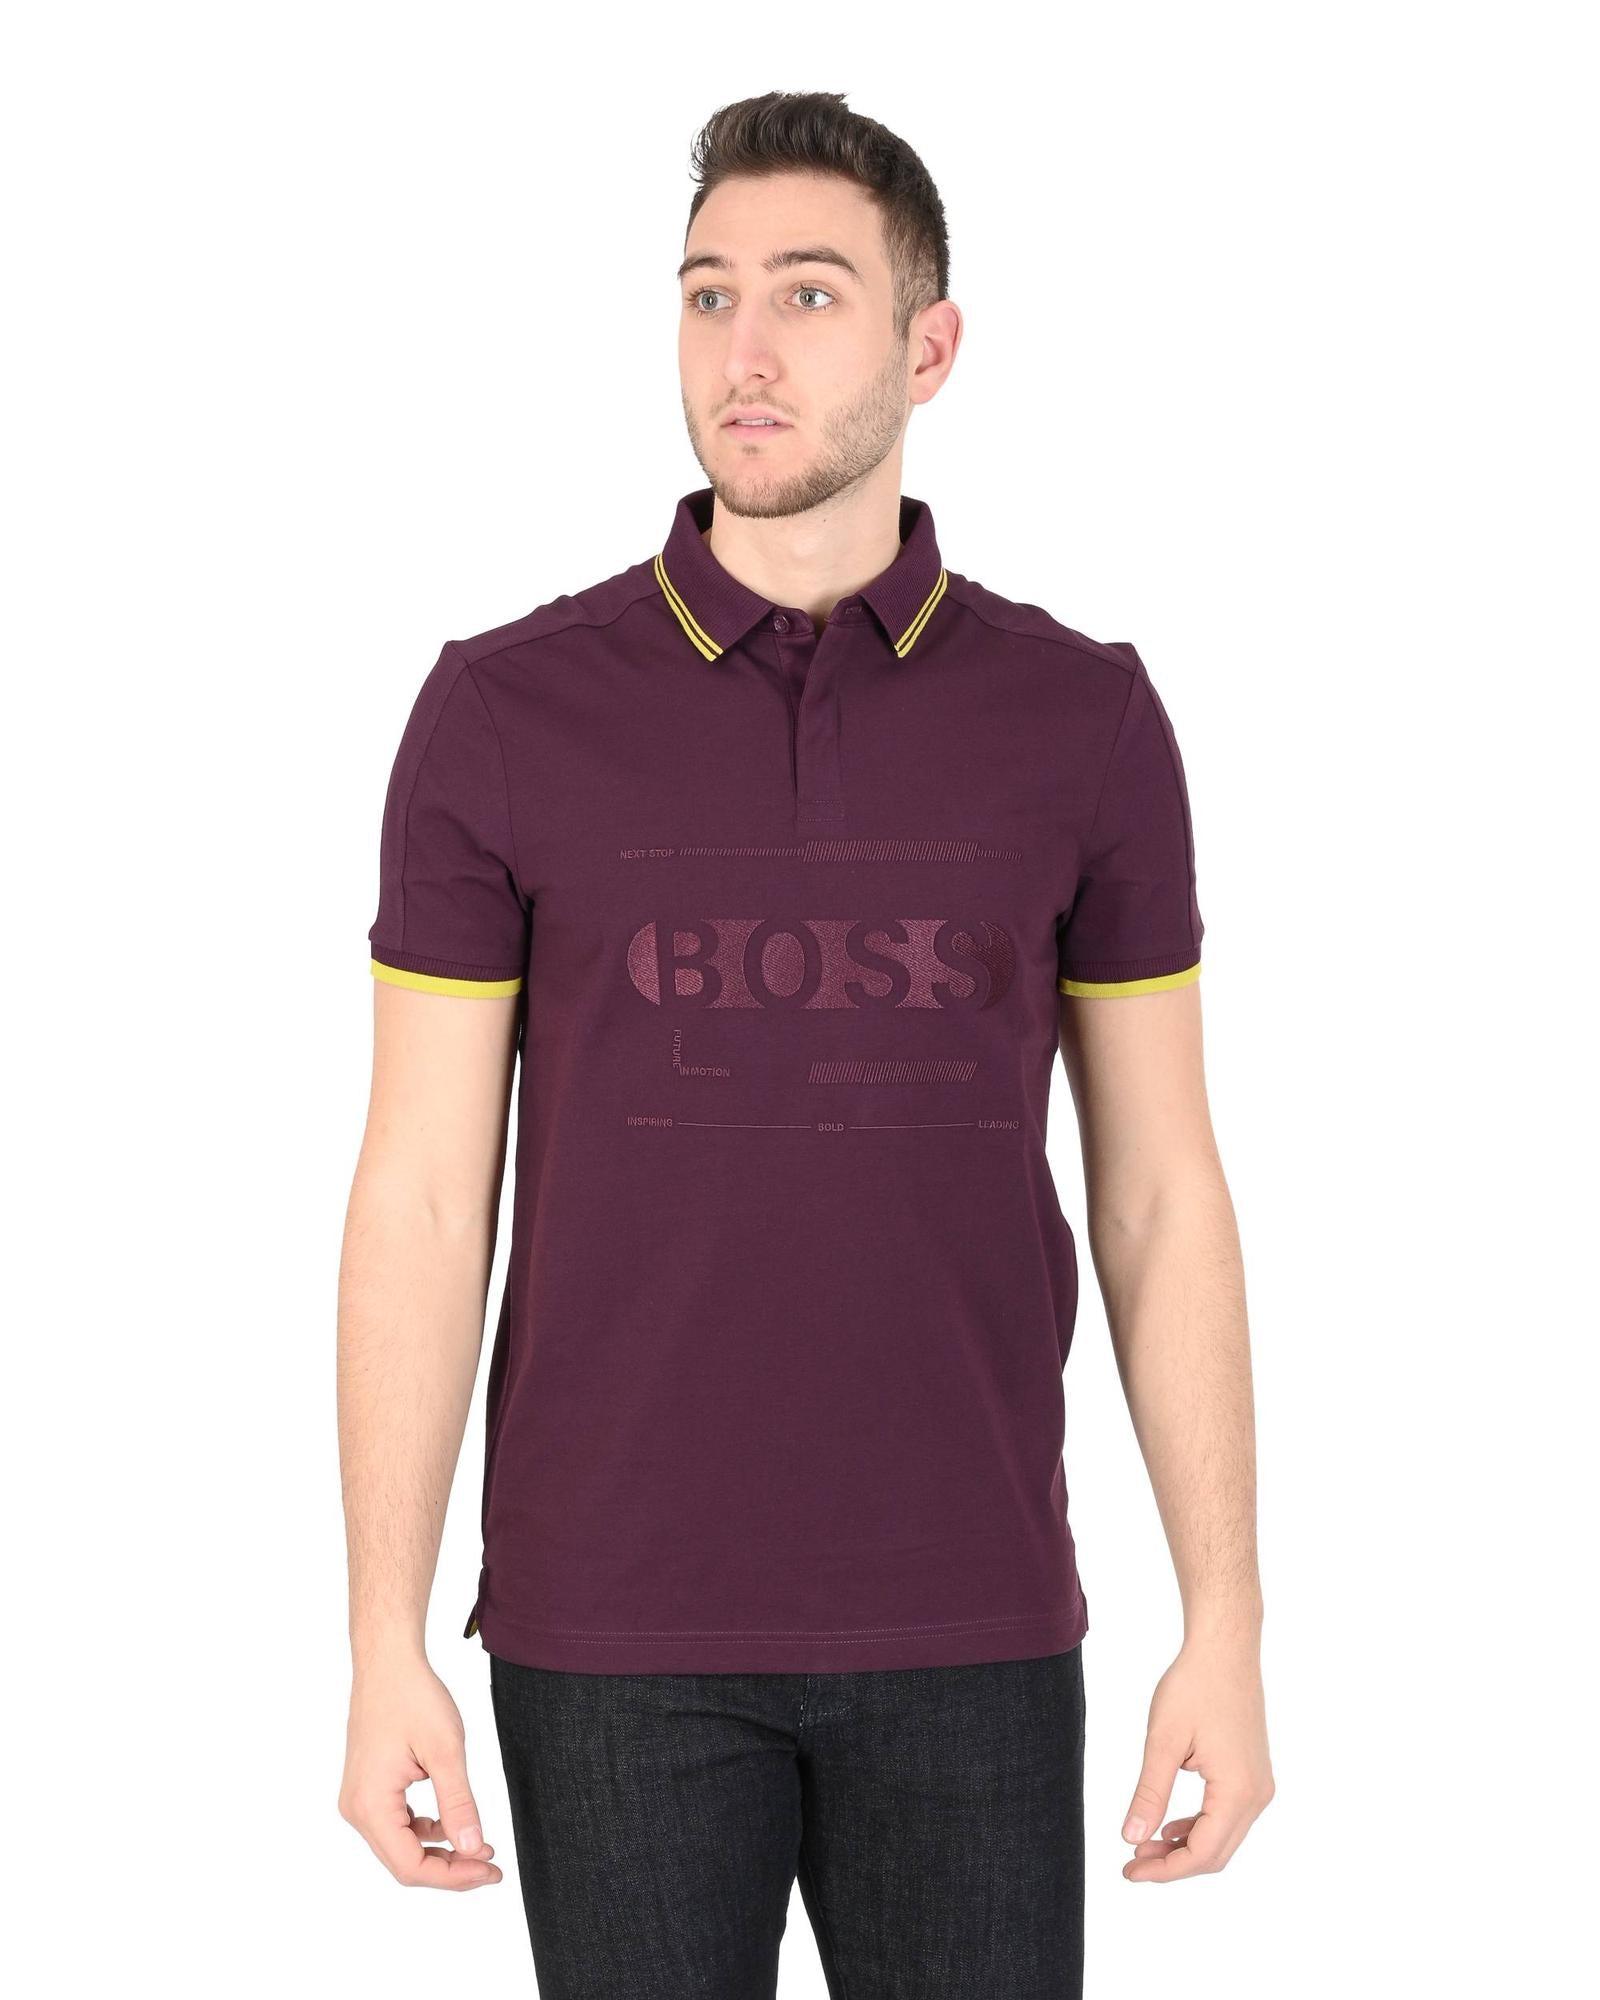 Regal Purple Hugo Boss Polo Shirt